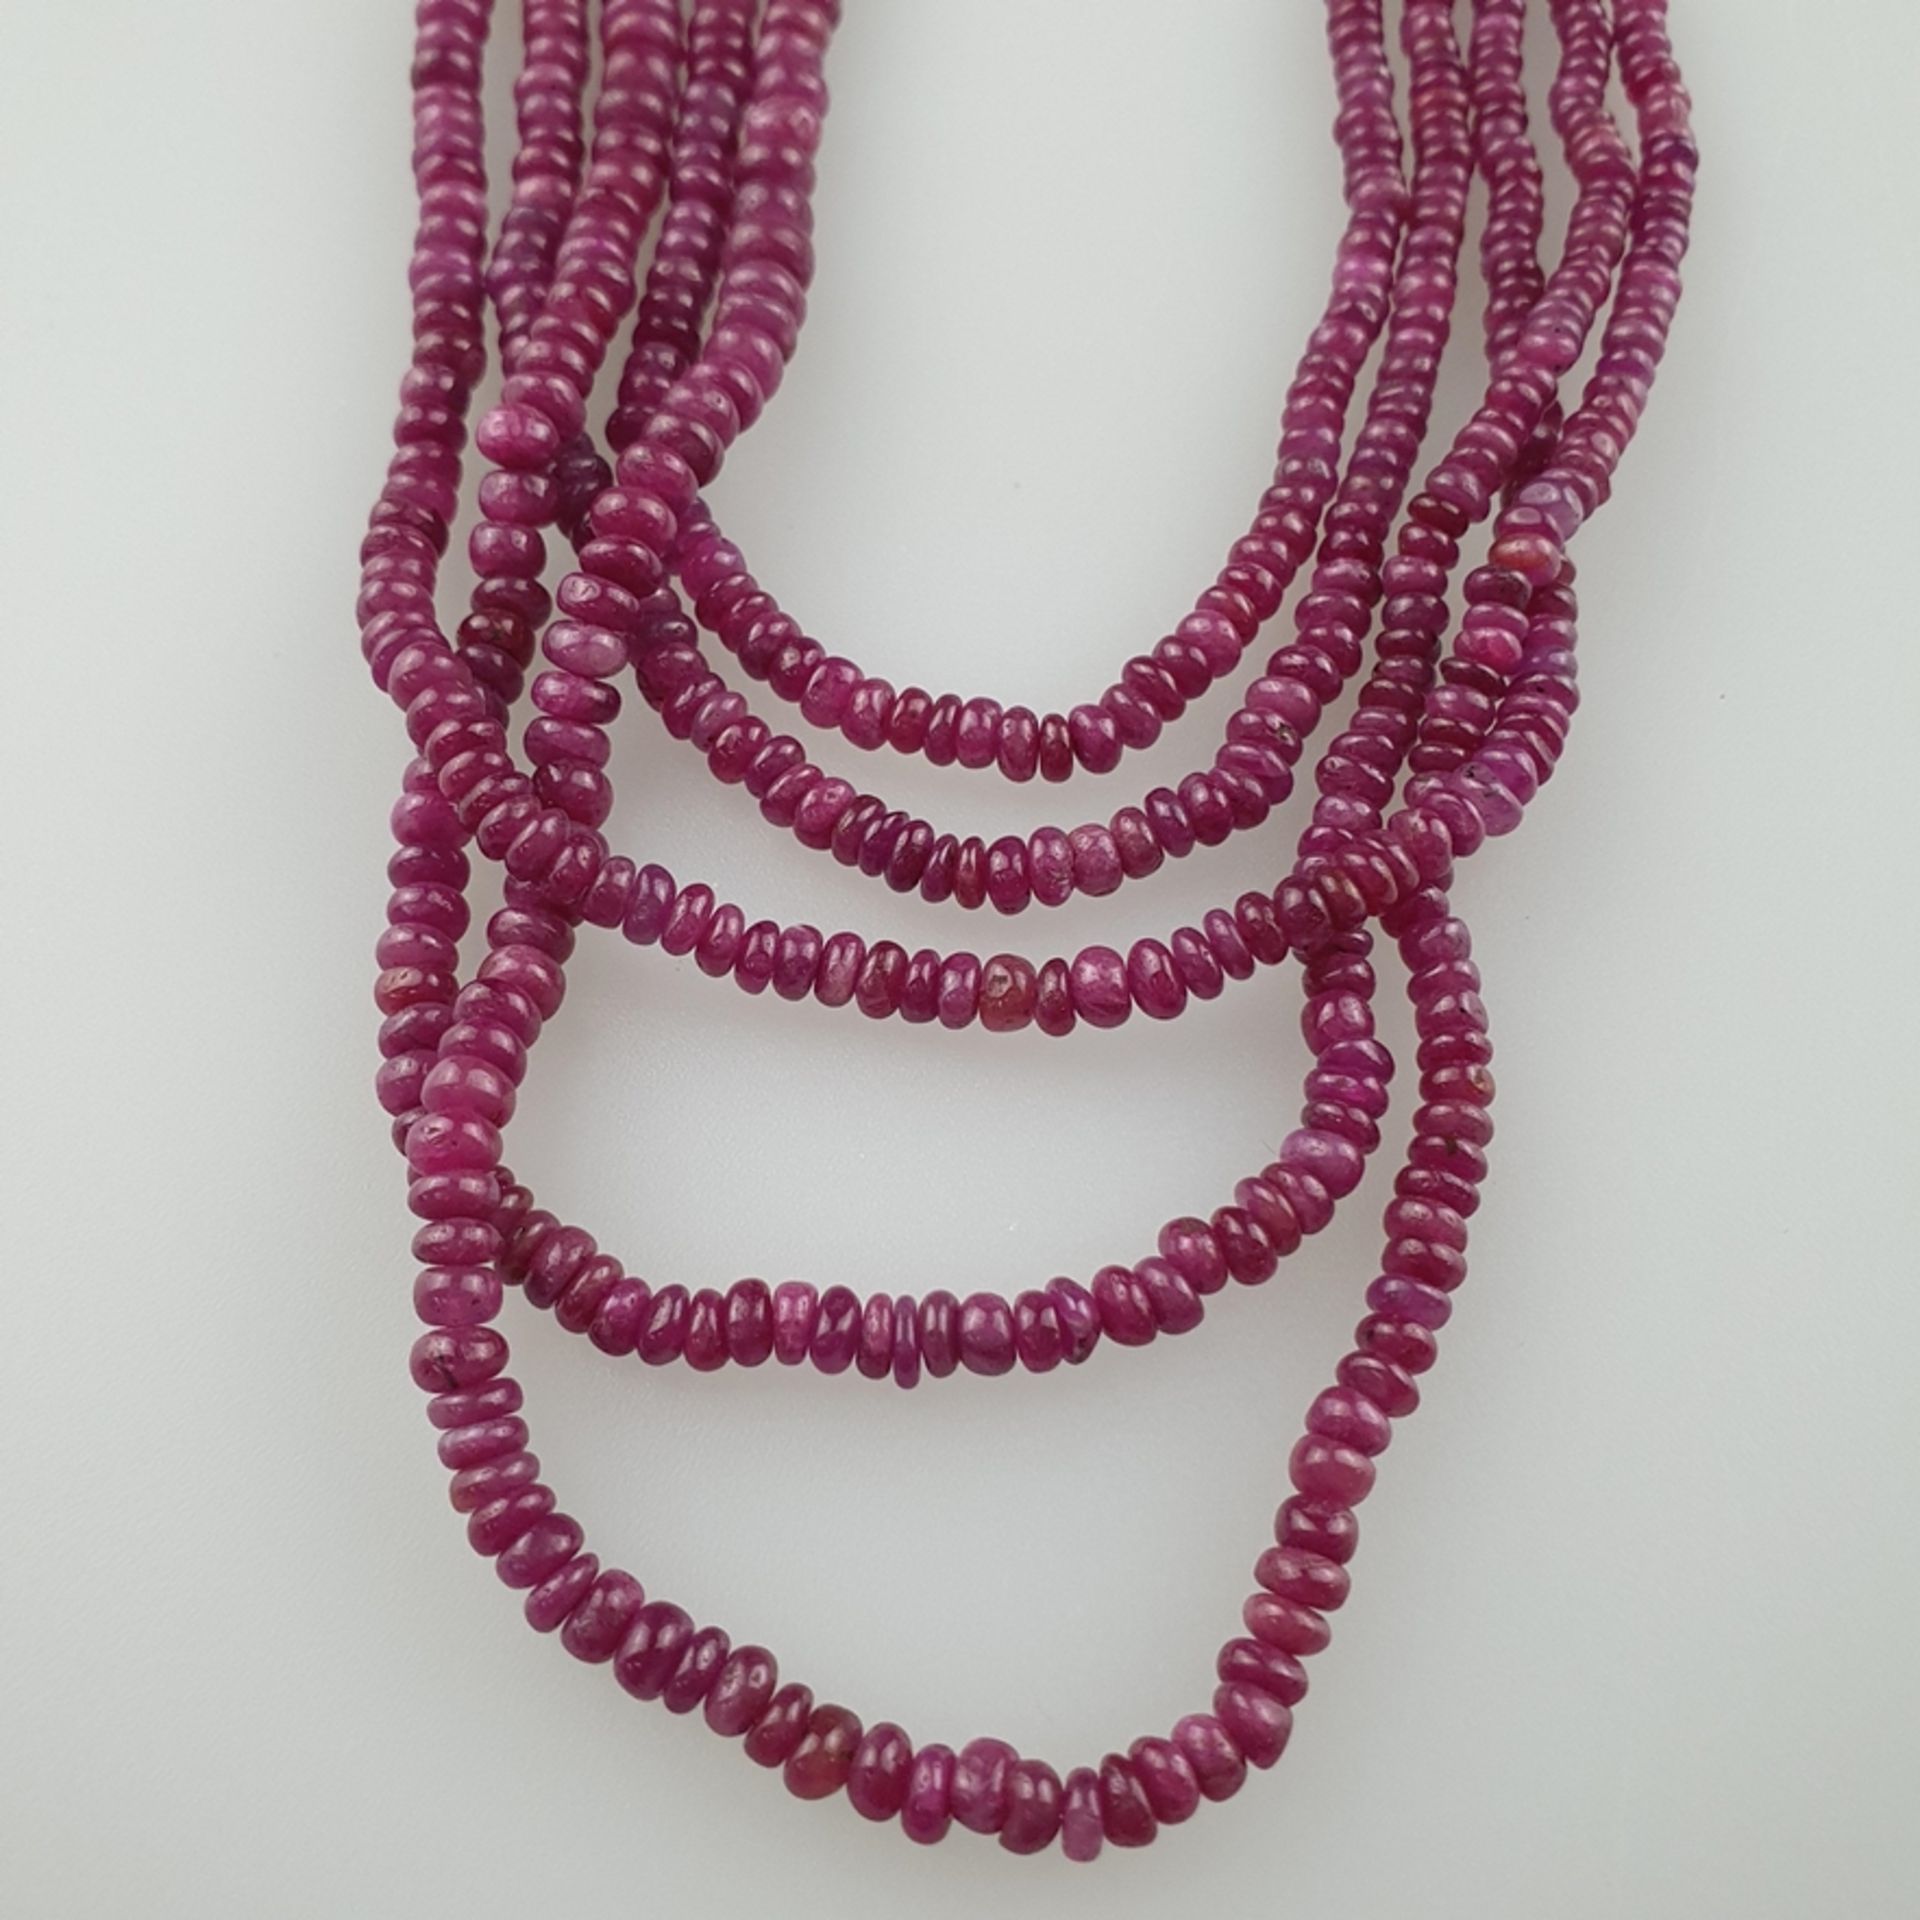 Fünfreihiges Rubin-Collier - Rubin-Rondelle, zusamme | 440cts Five row ruby gemstone necklace with - Image 2 of 5